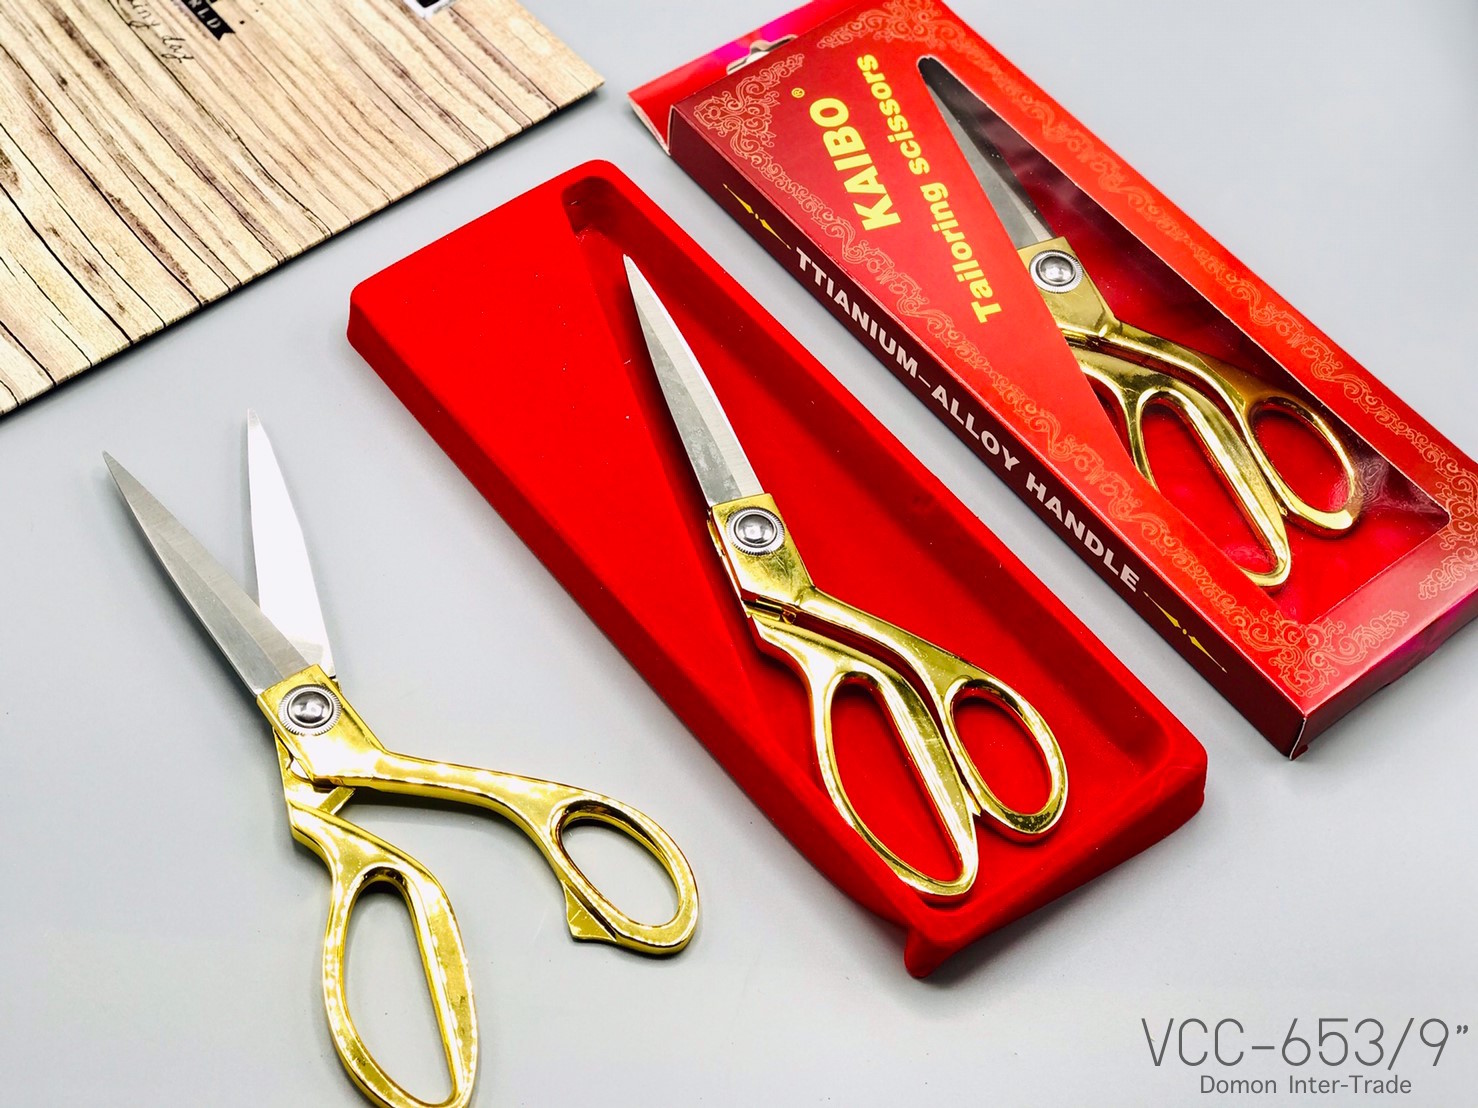 Kaibo Tailoring Scissors (Brown & Gold)